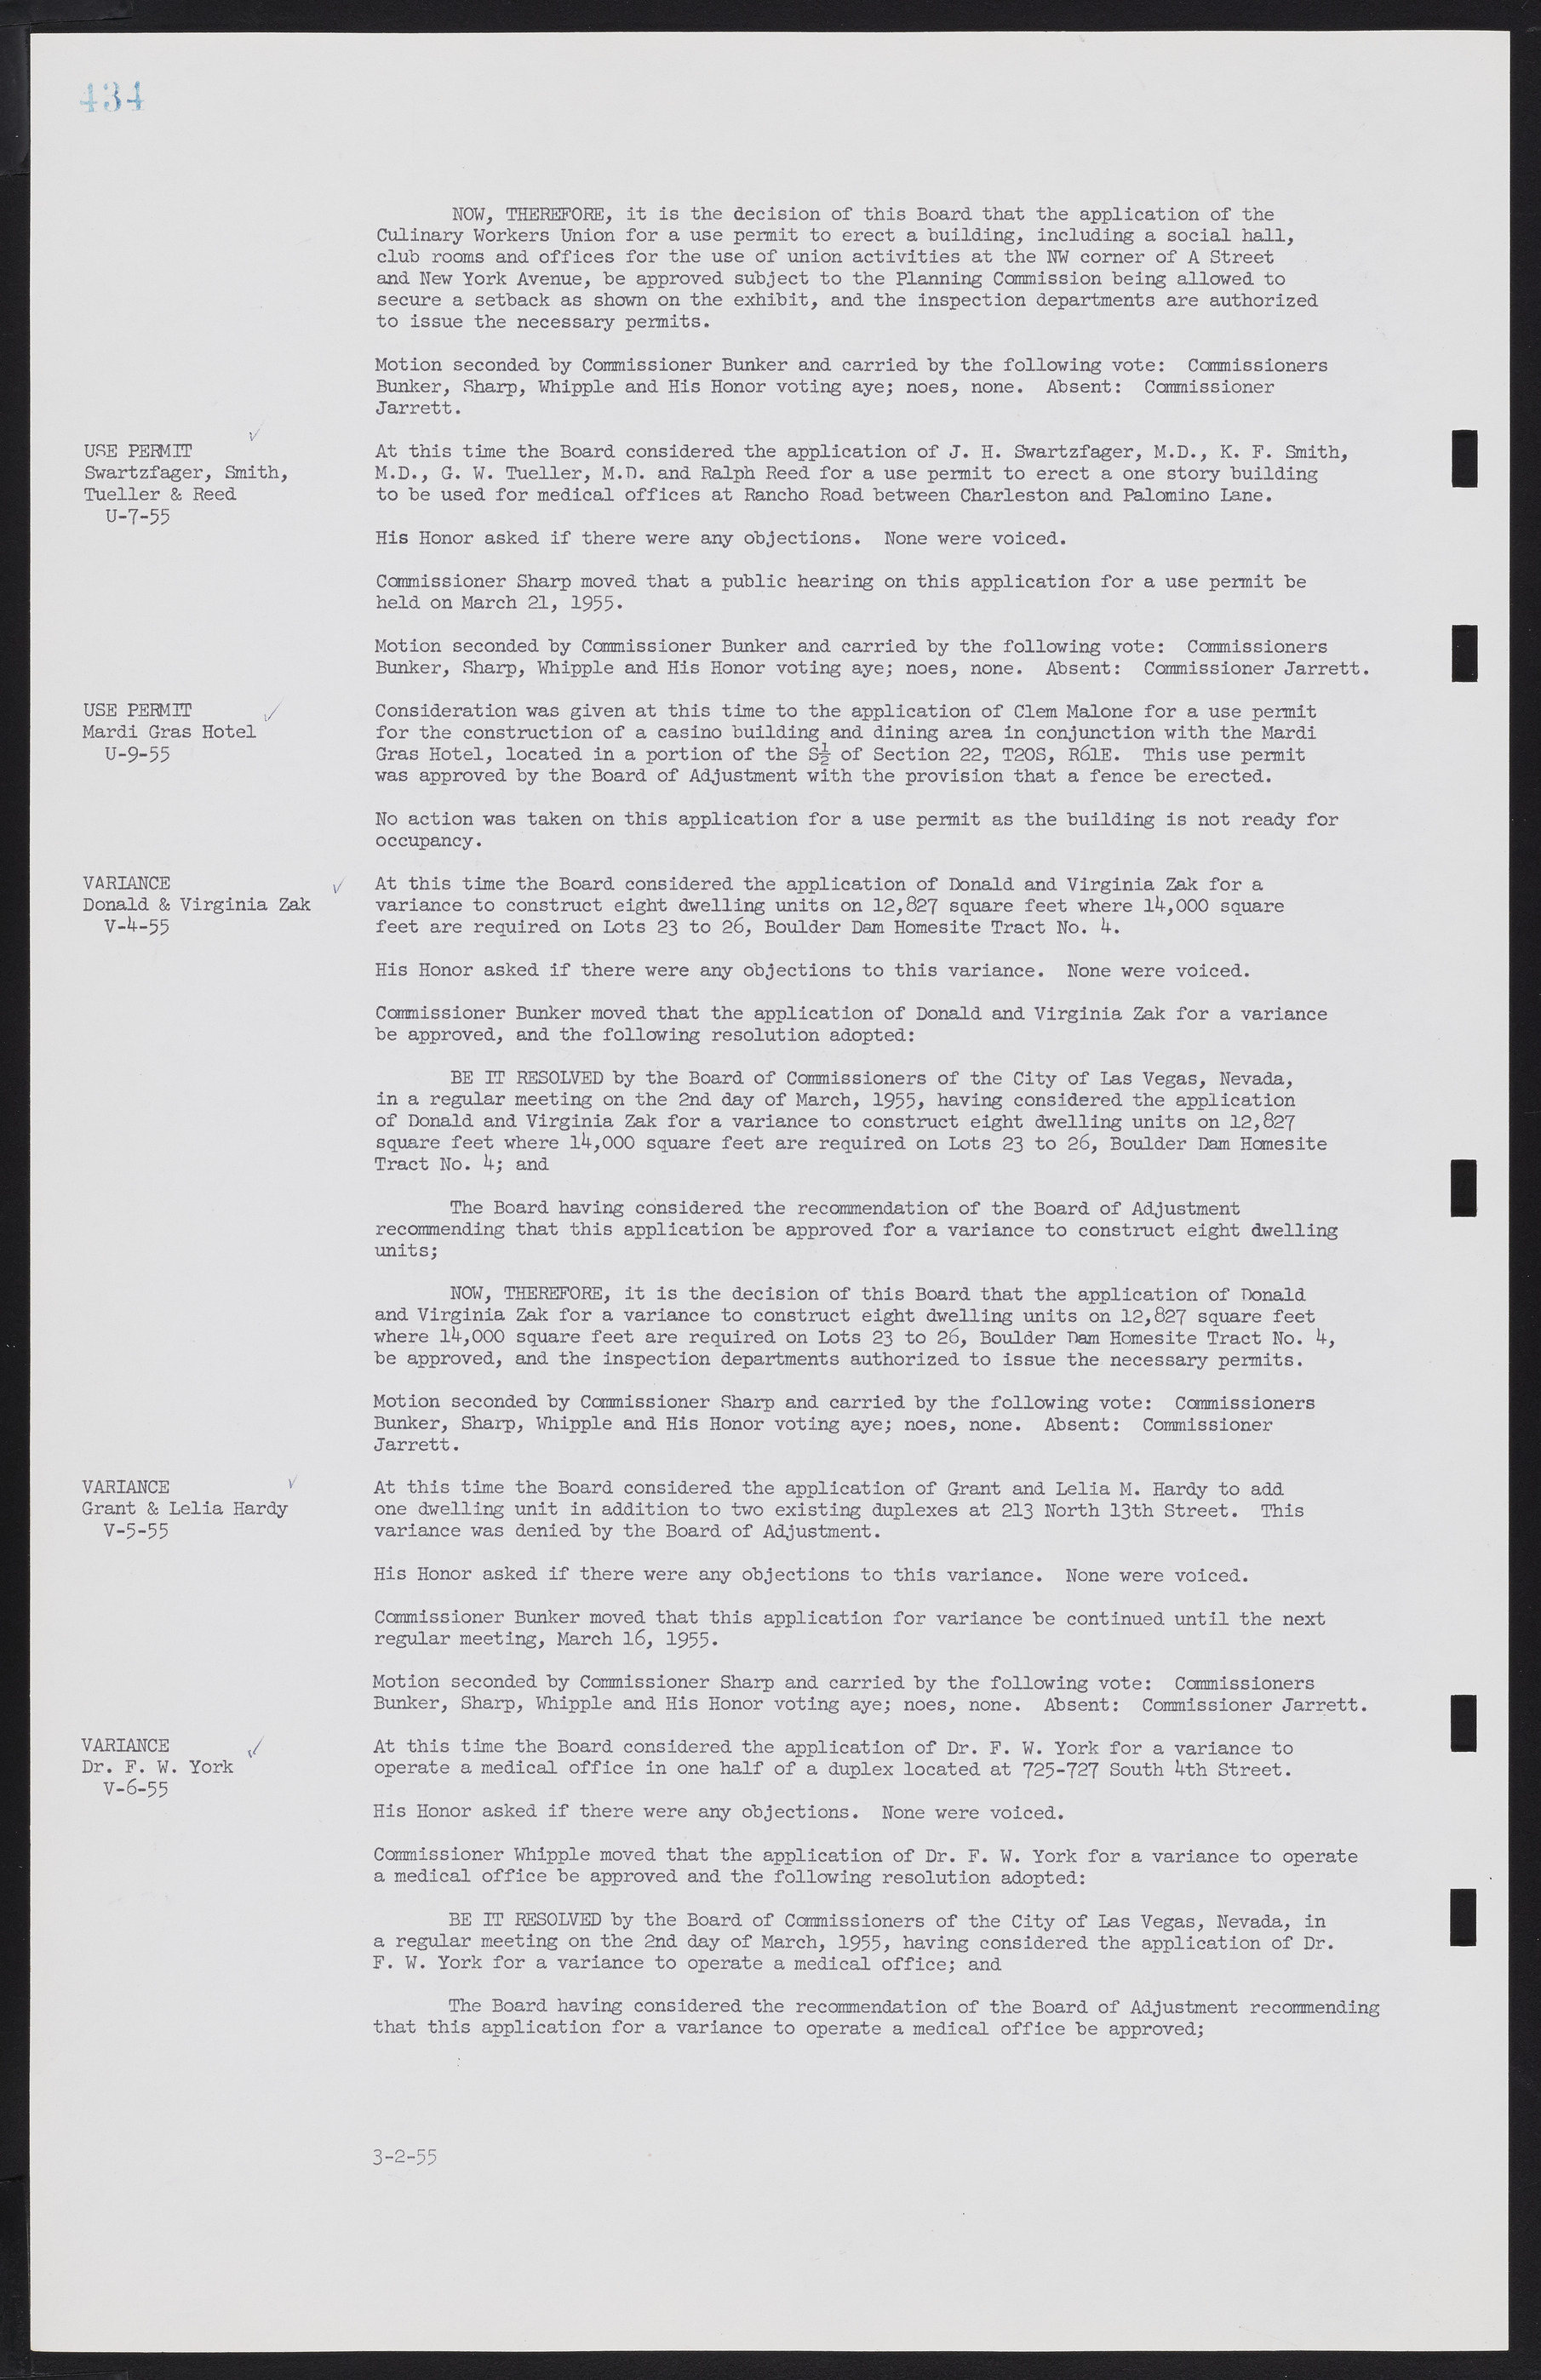 Las Vegas City Commission Minutes, February 17, 1954 to September 21, 1955, lvc000009-440